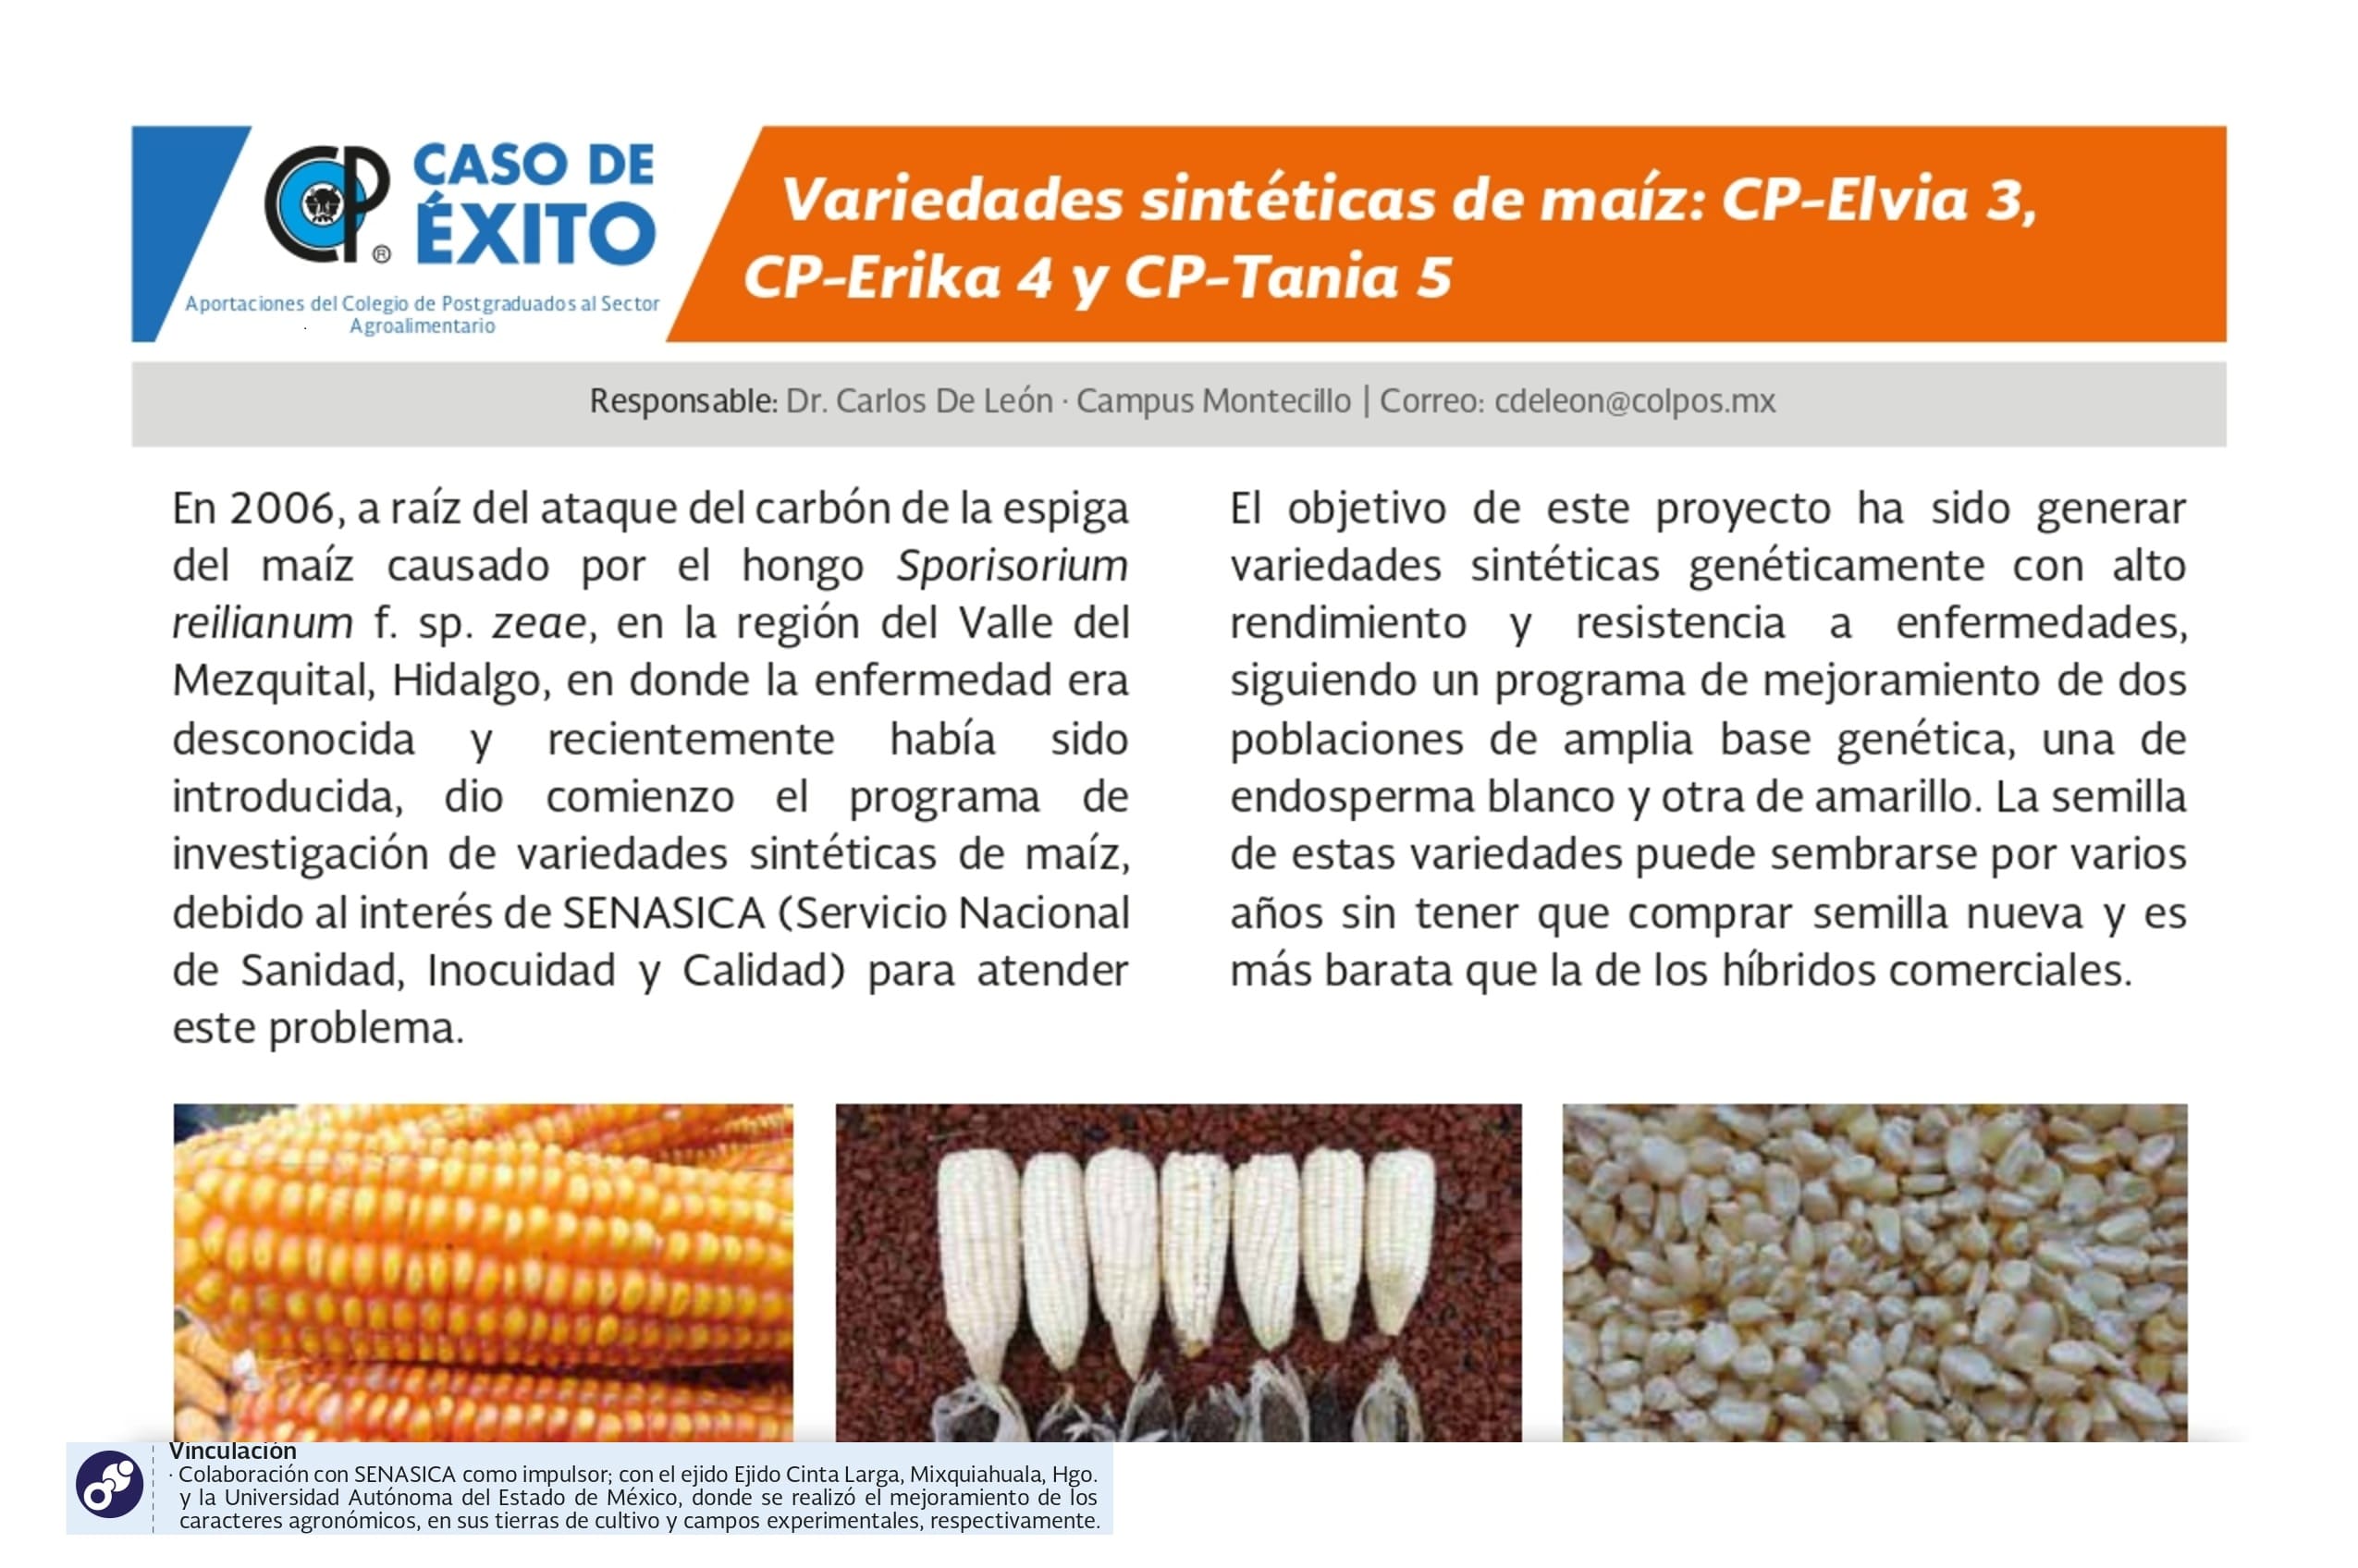 Variedades sintéticas de maíz: CP-Elvia 3, CP-Erika 4 y CP-Tania 5.